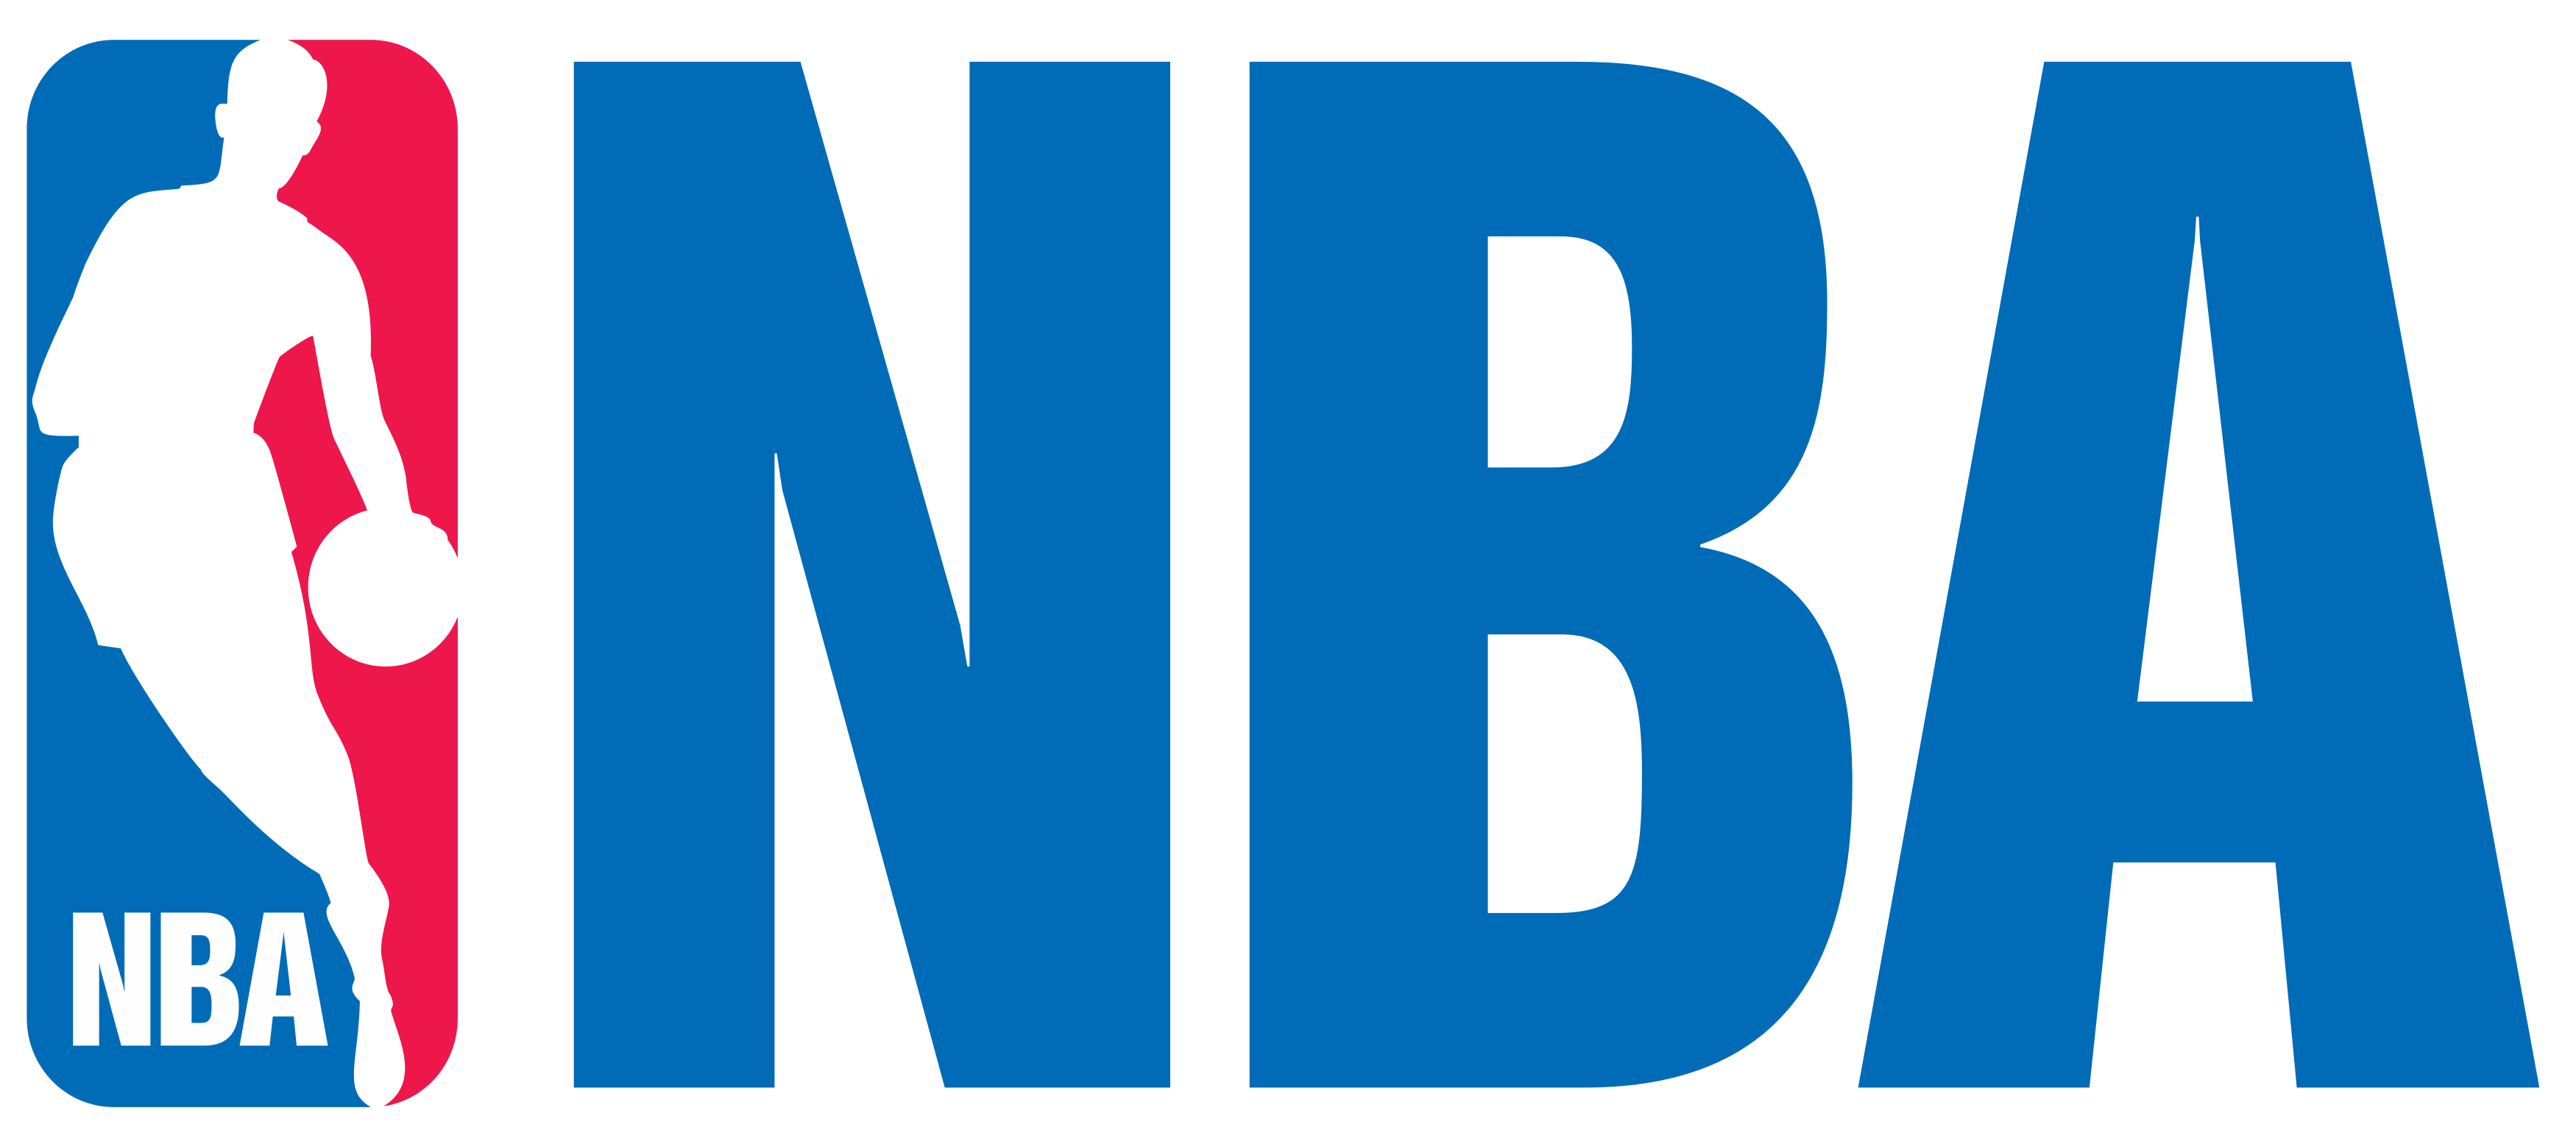 NBA标志图片素材-编号38845642-图行天下